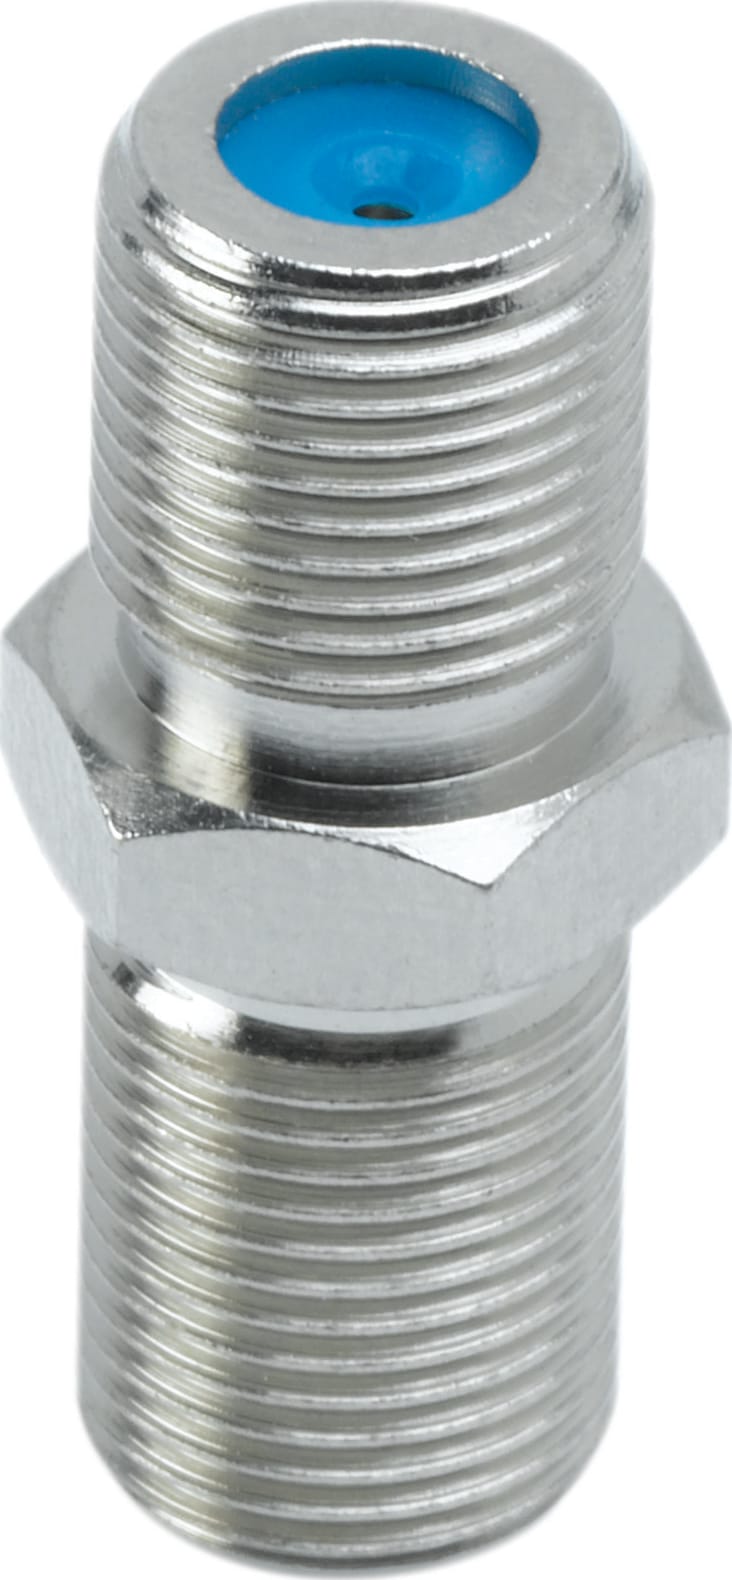 coax cable splice connectors